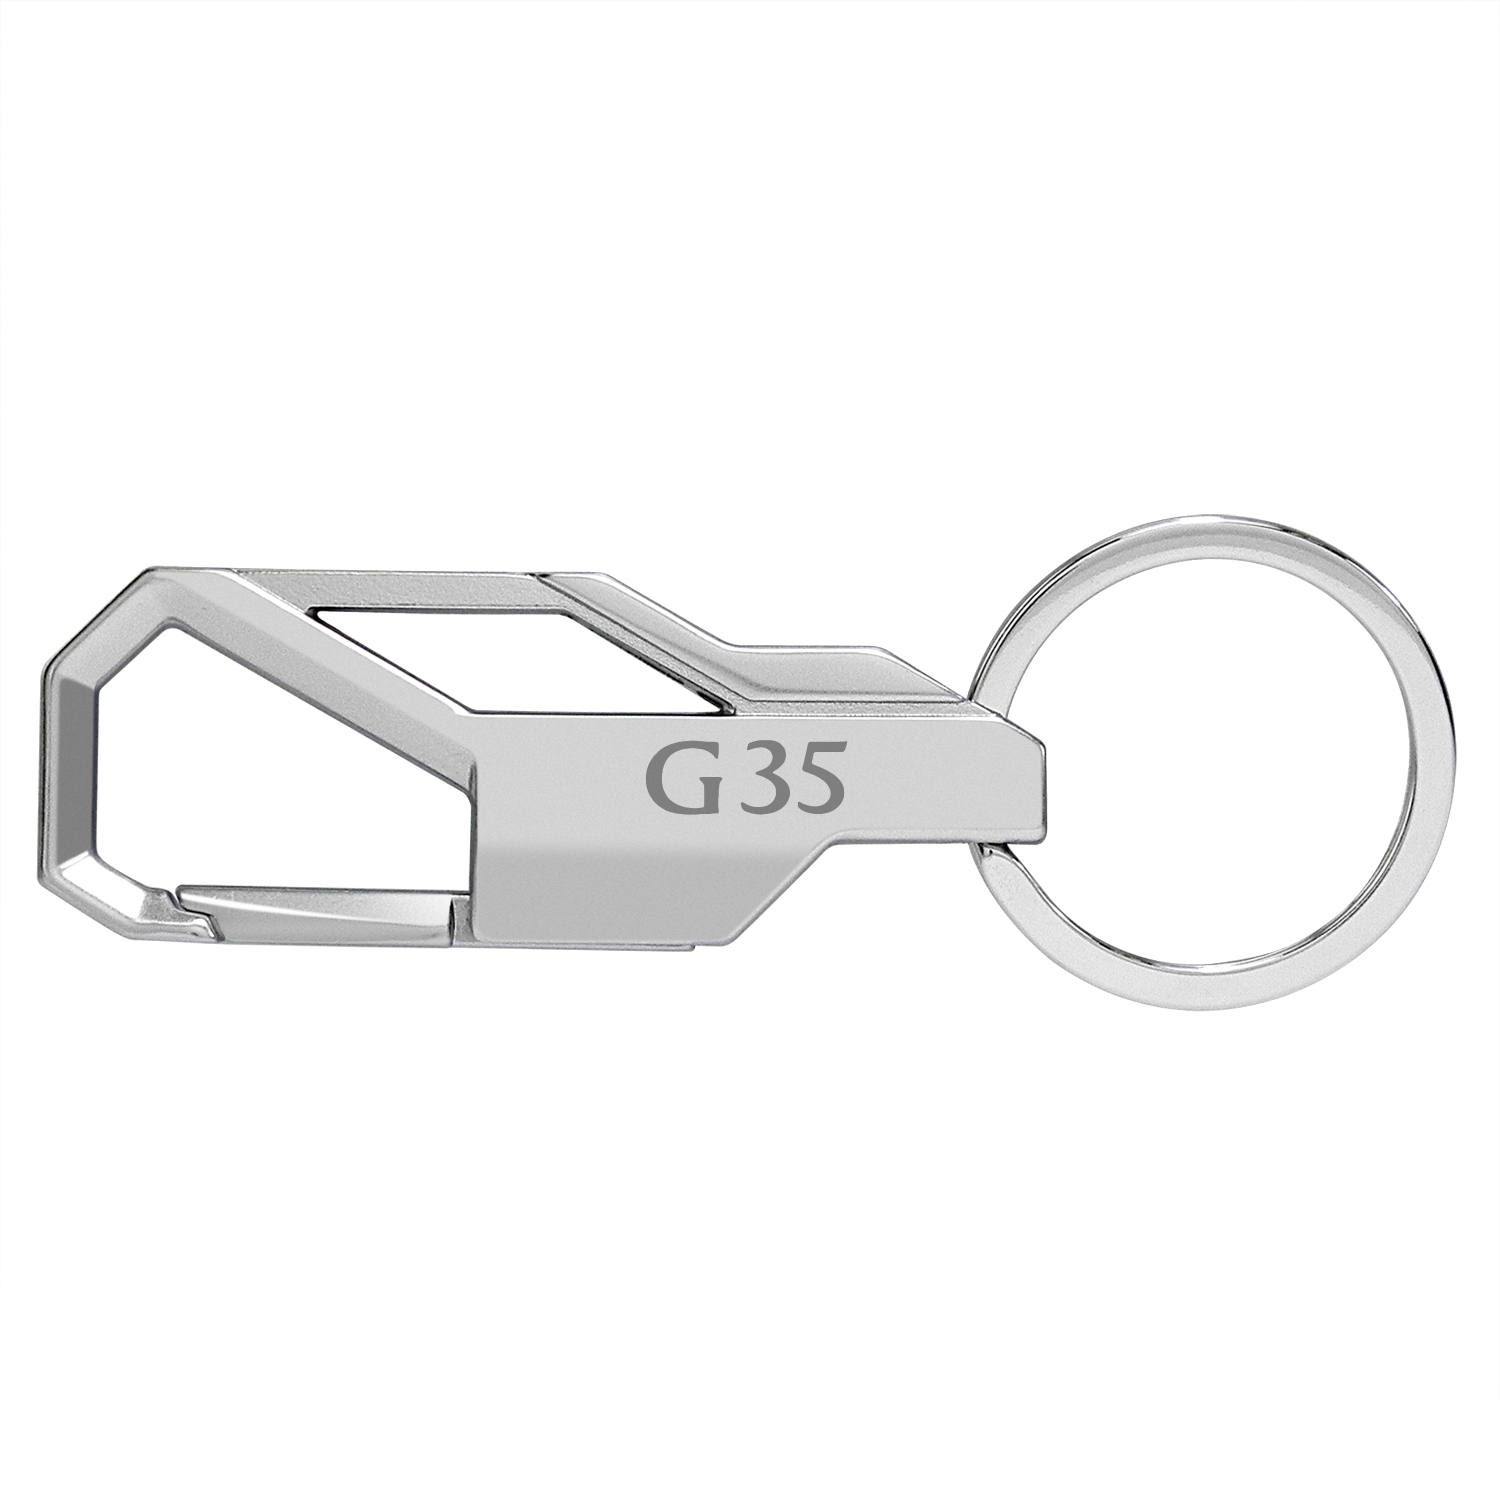 Infiniti G35 Silver Snap Hook Metal Key Chain